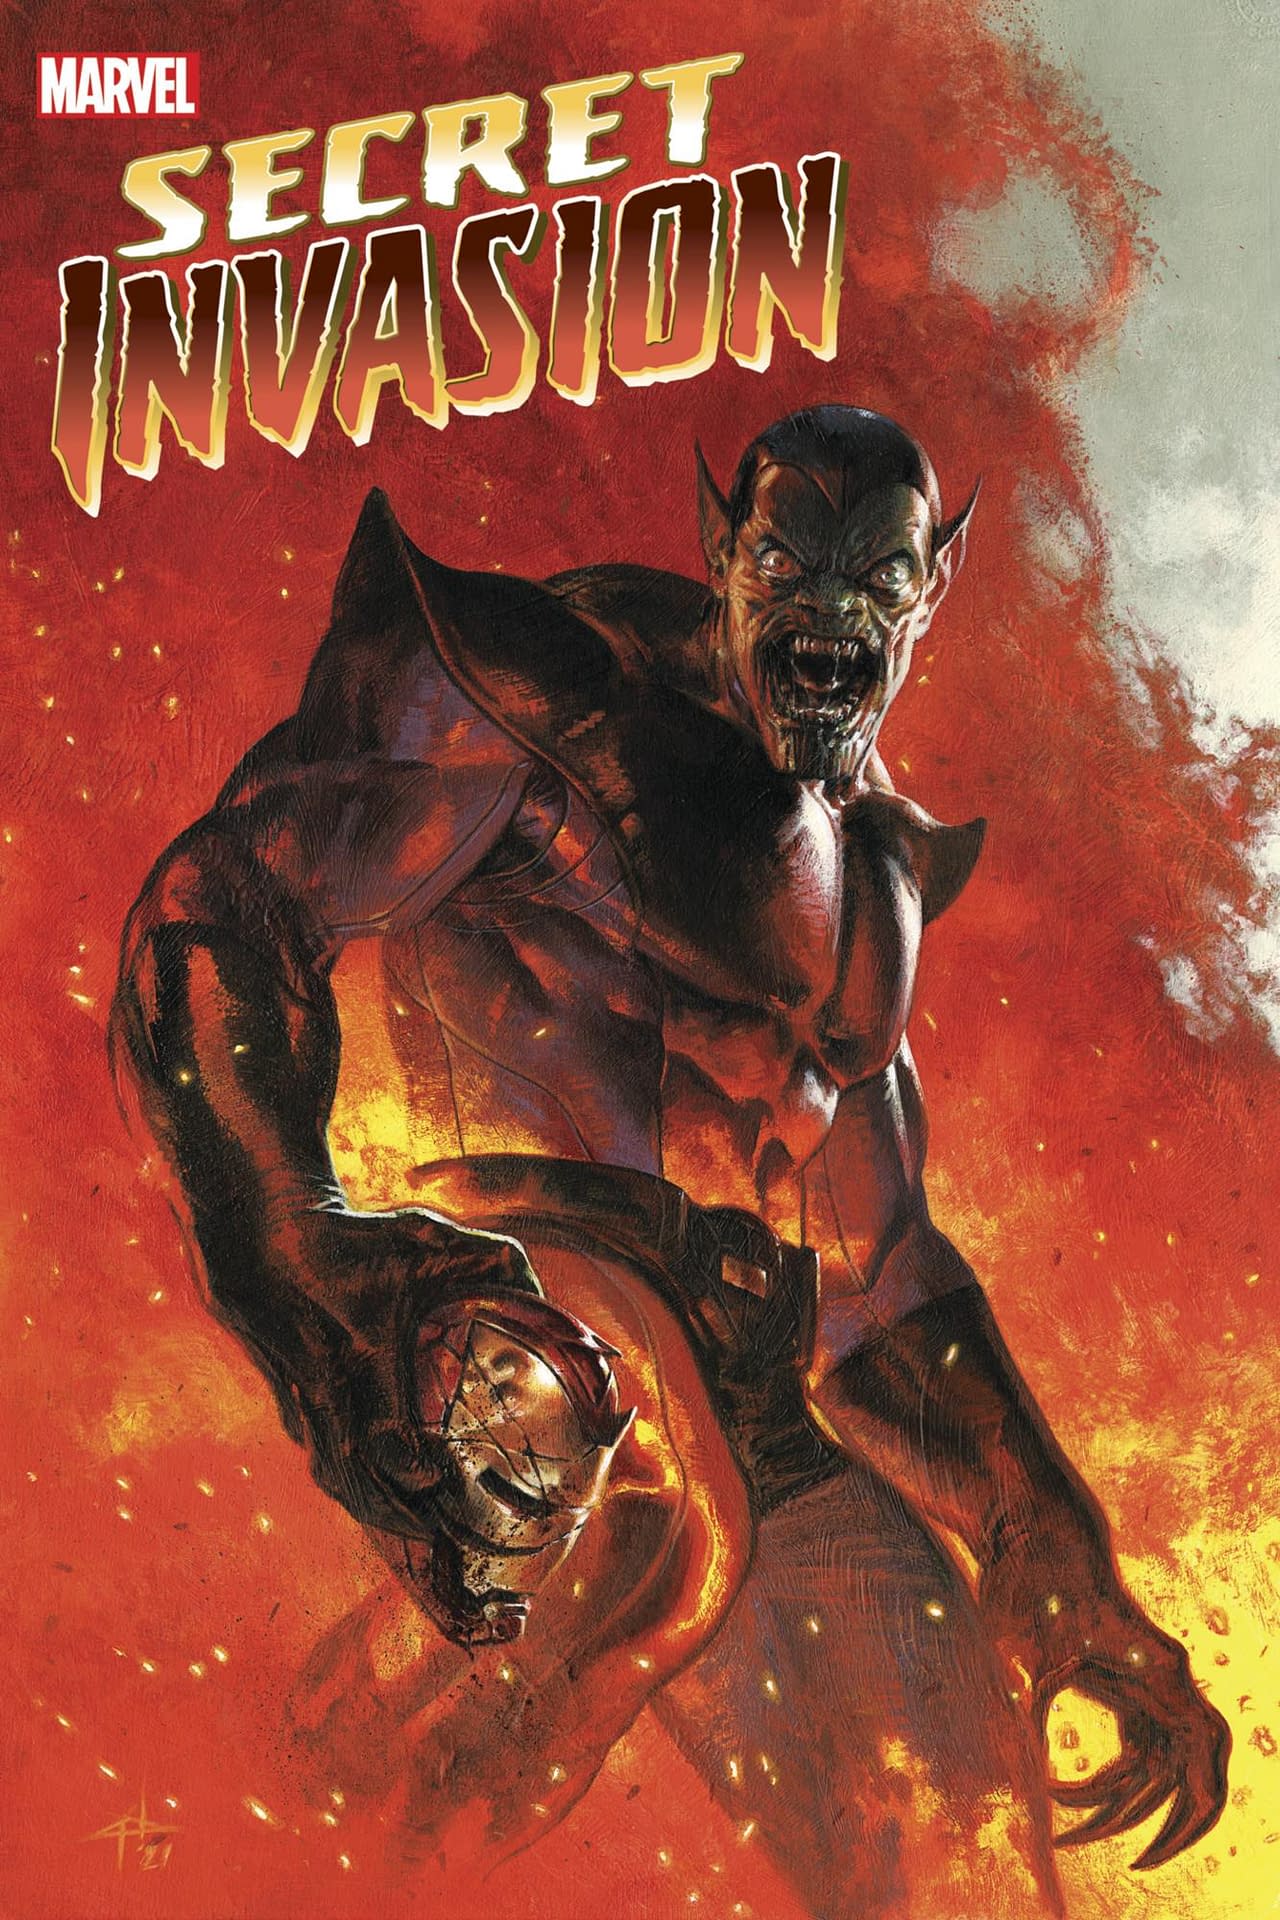 Marvel Comics Final Thoughts – Secret Invasion – RogueWatson